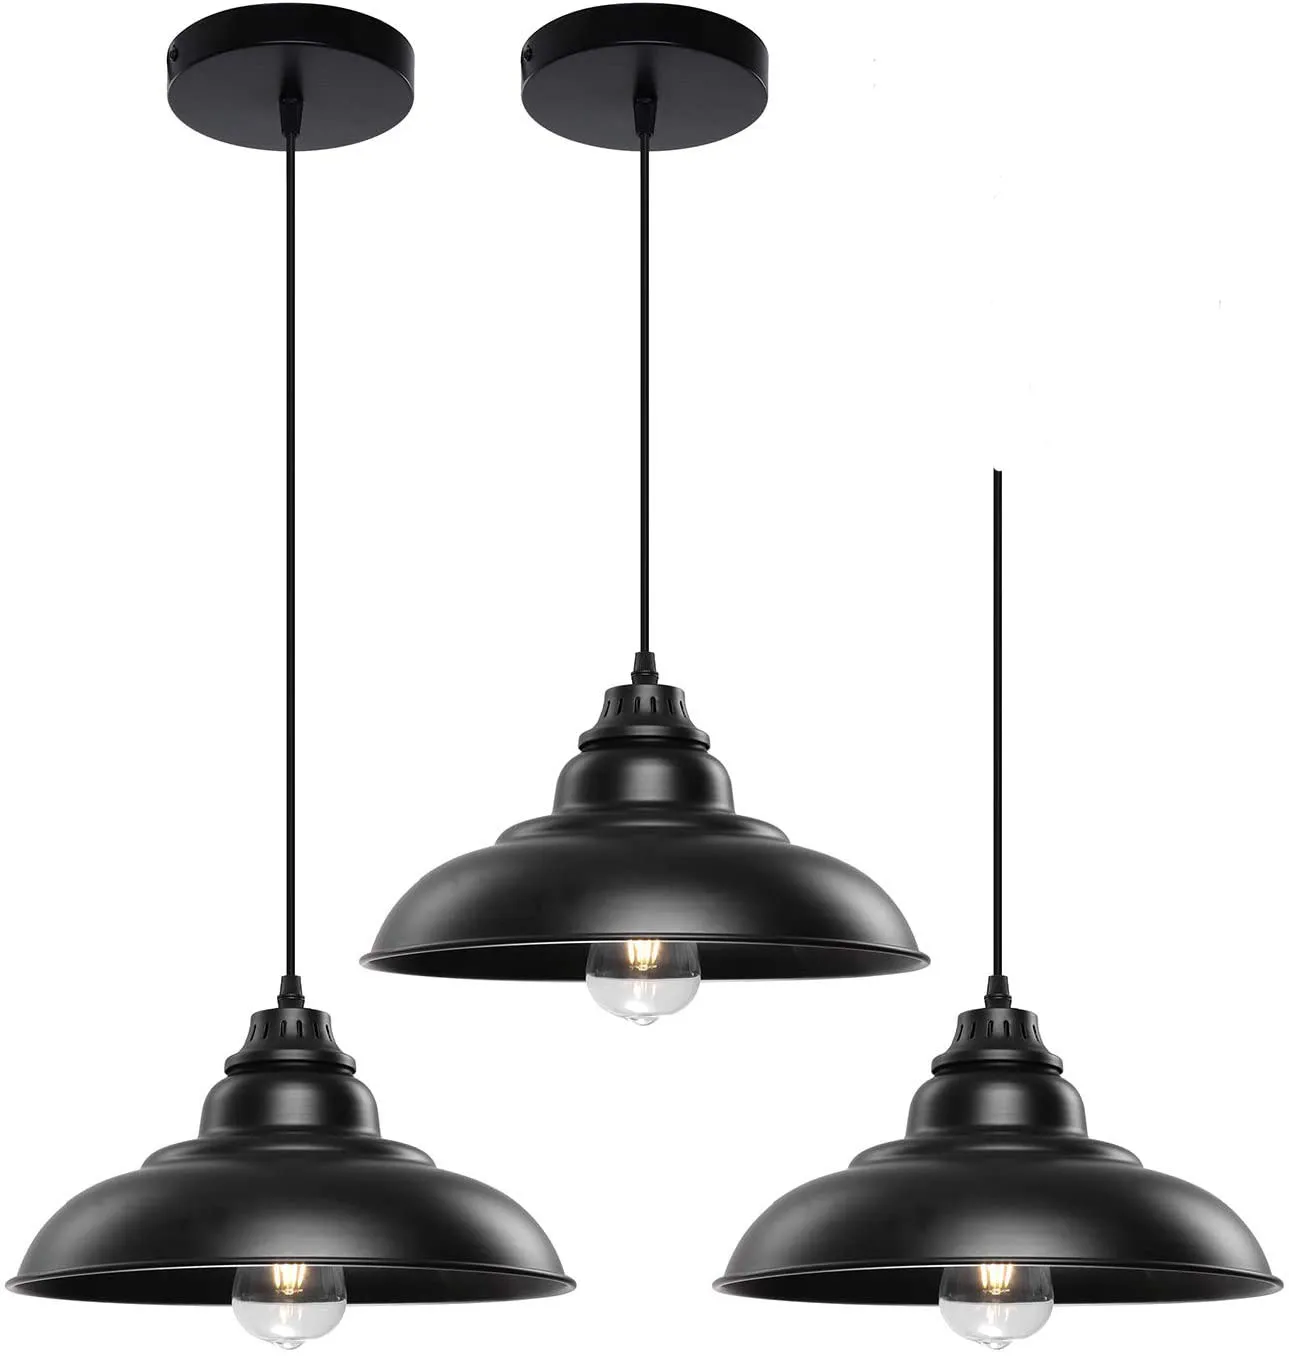 Pendant Lights, Lika Industrial Barn Ceiling Light Fixtures Black Hanging Pendant Lighting for Kitchen Island, Dining Room, Foye